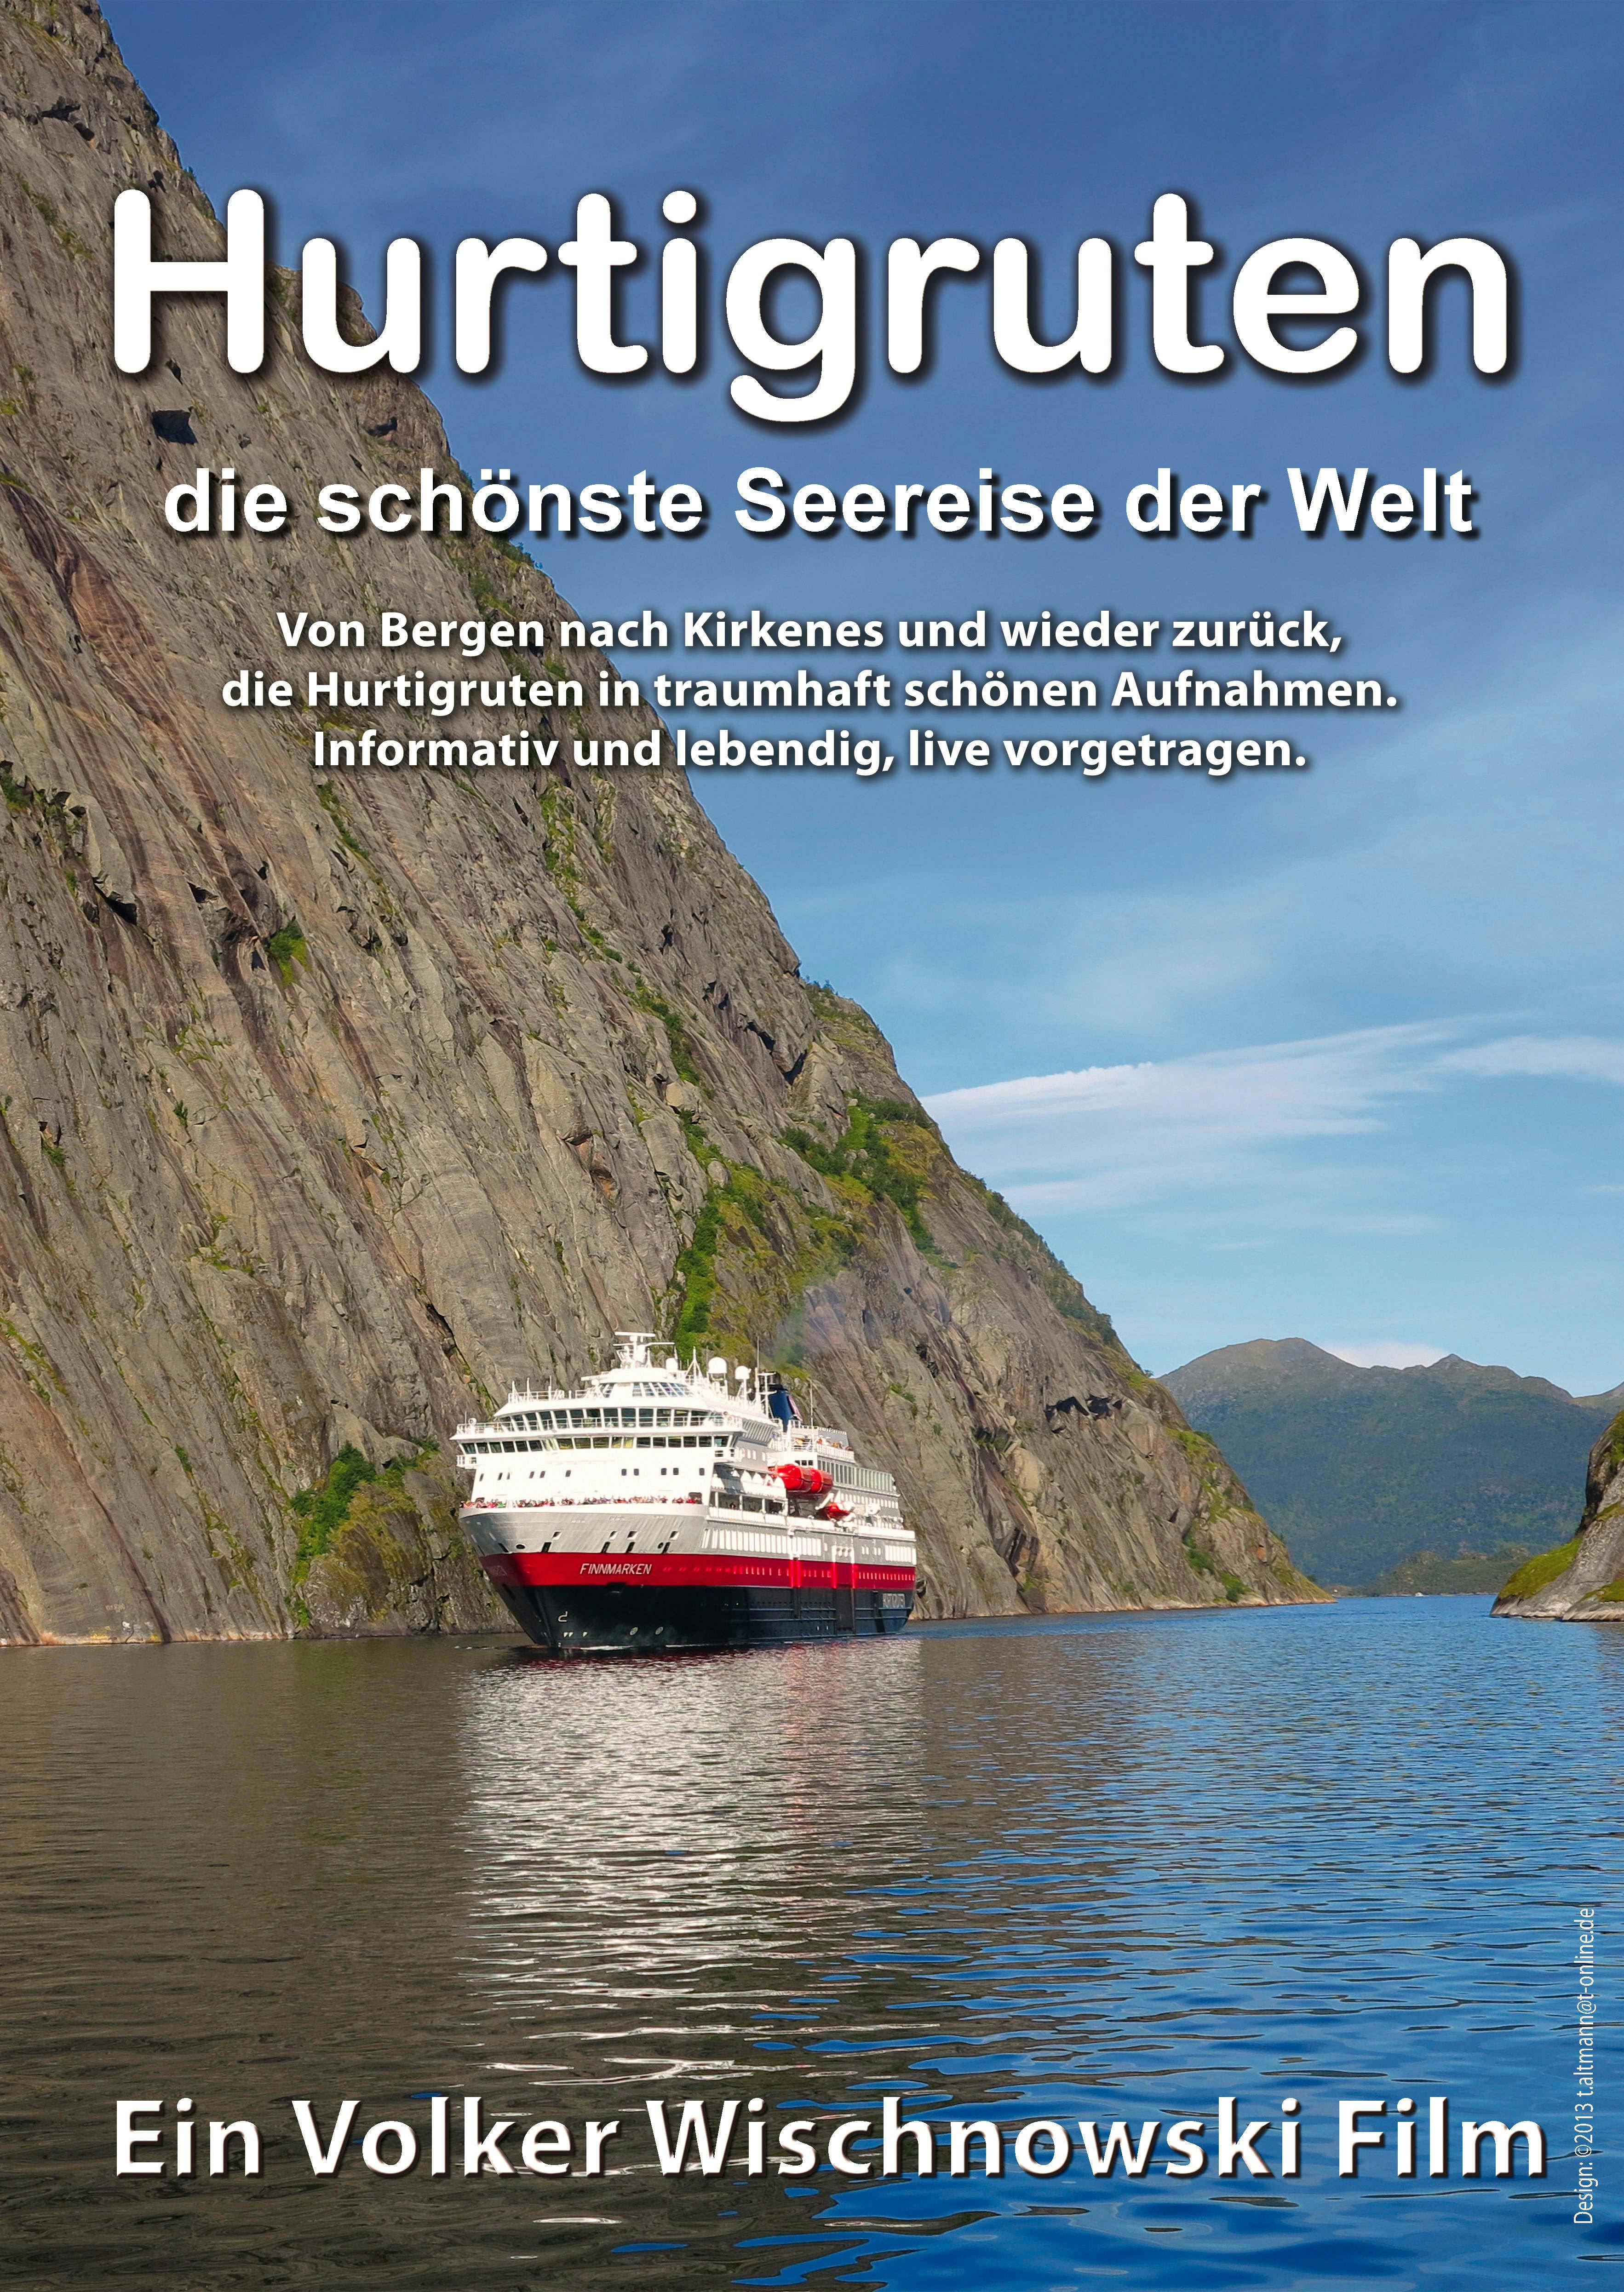 Movie poster for Hurtigruten. 